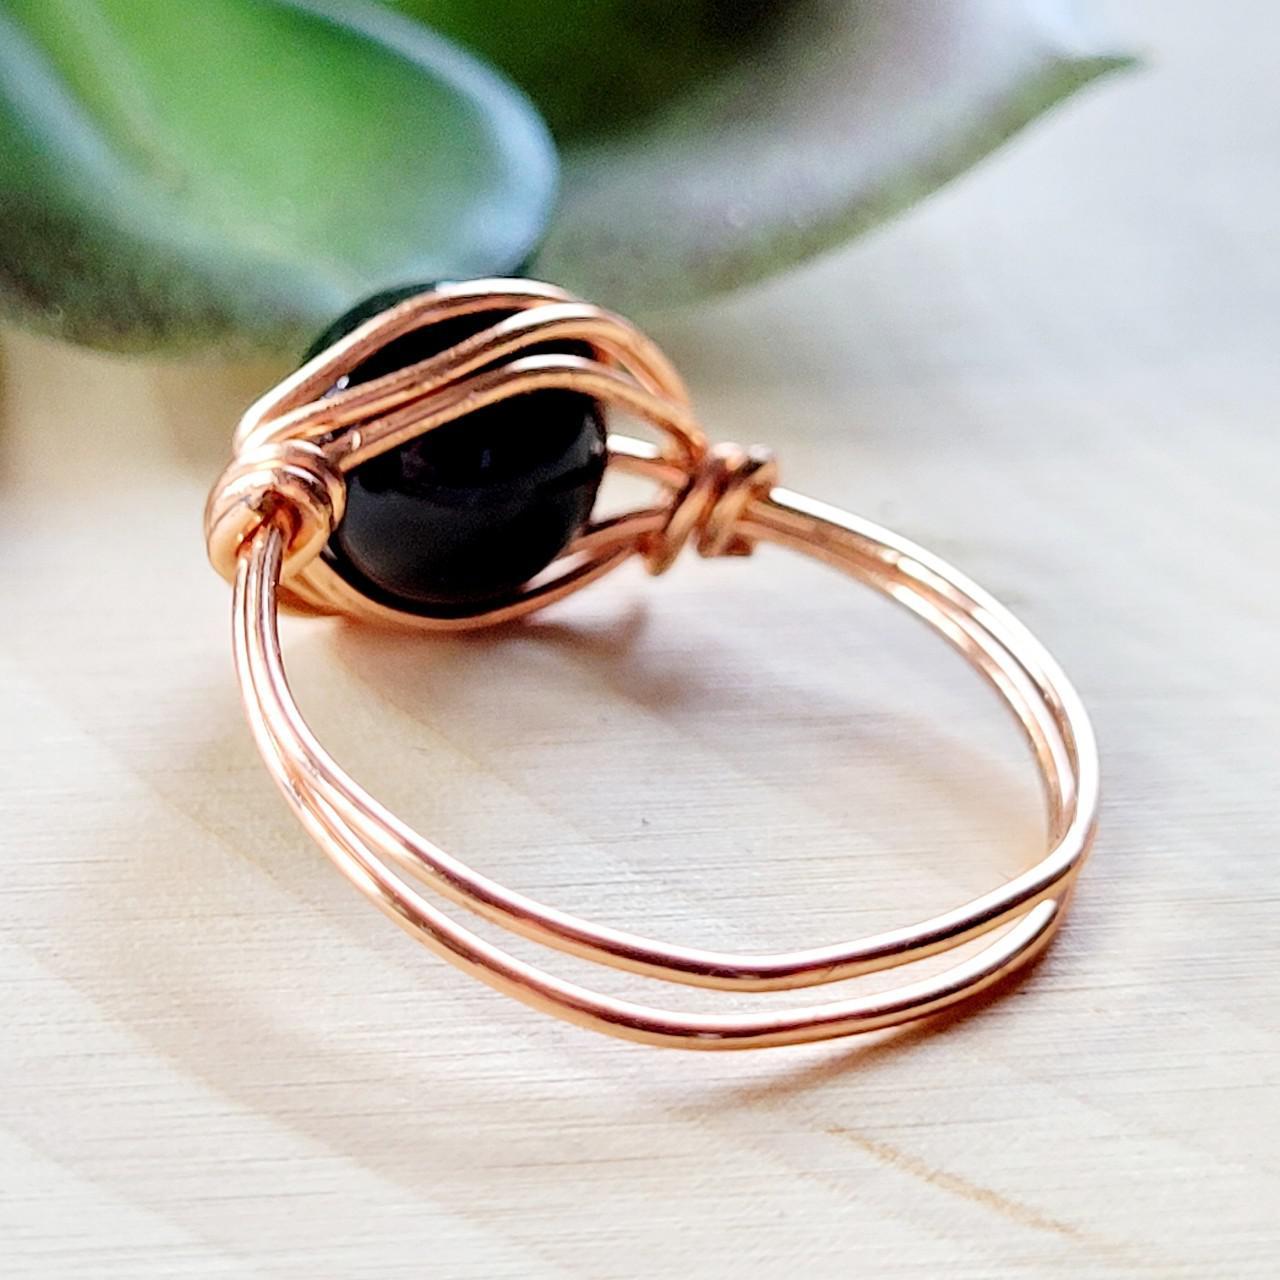 Product Image 3 - Crystal ring.
Genuine polished Rainbow Obsidian